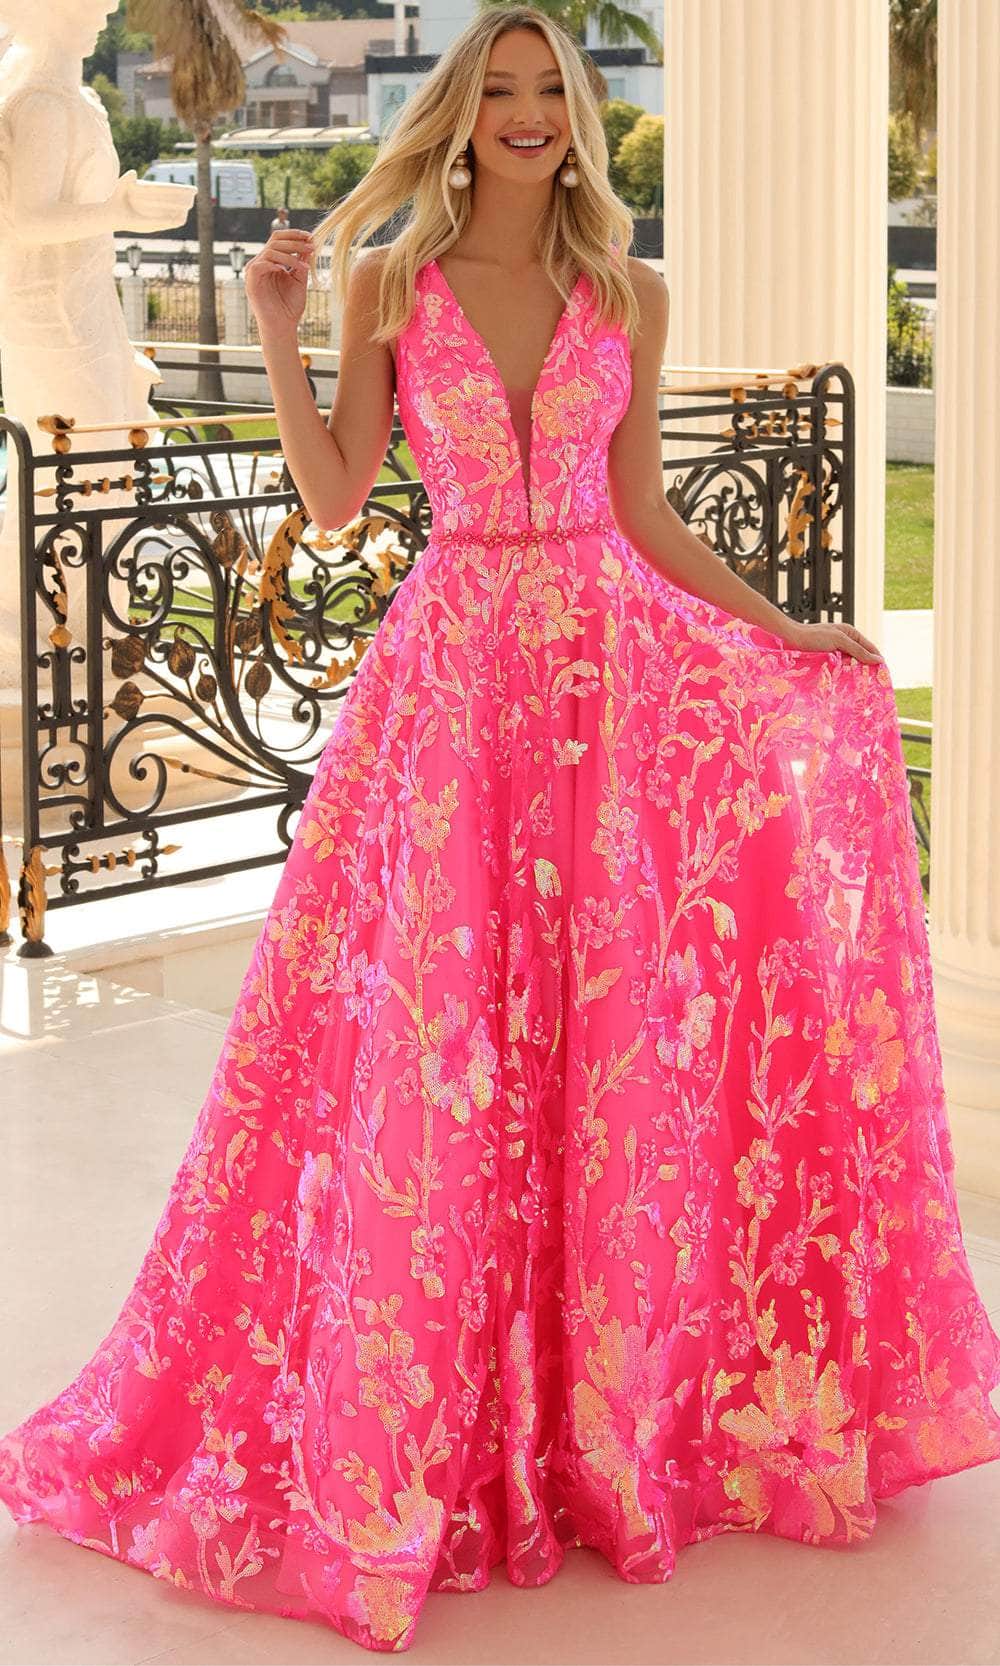 Clarisse 810458 - V-Neck Floral Sequin Ballgown Special Occasion Dress 00 / Flamingo